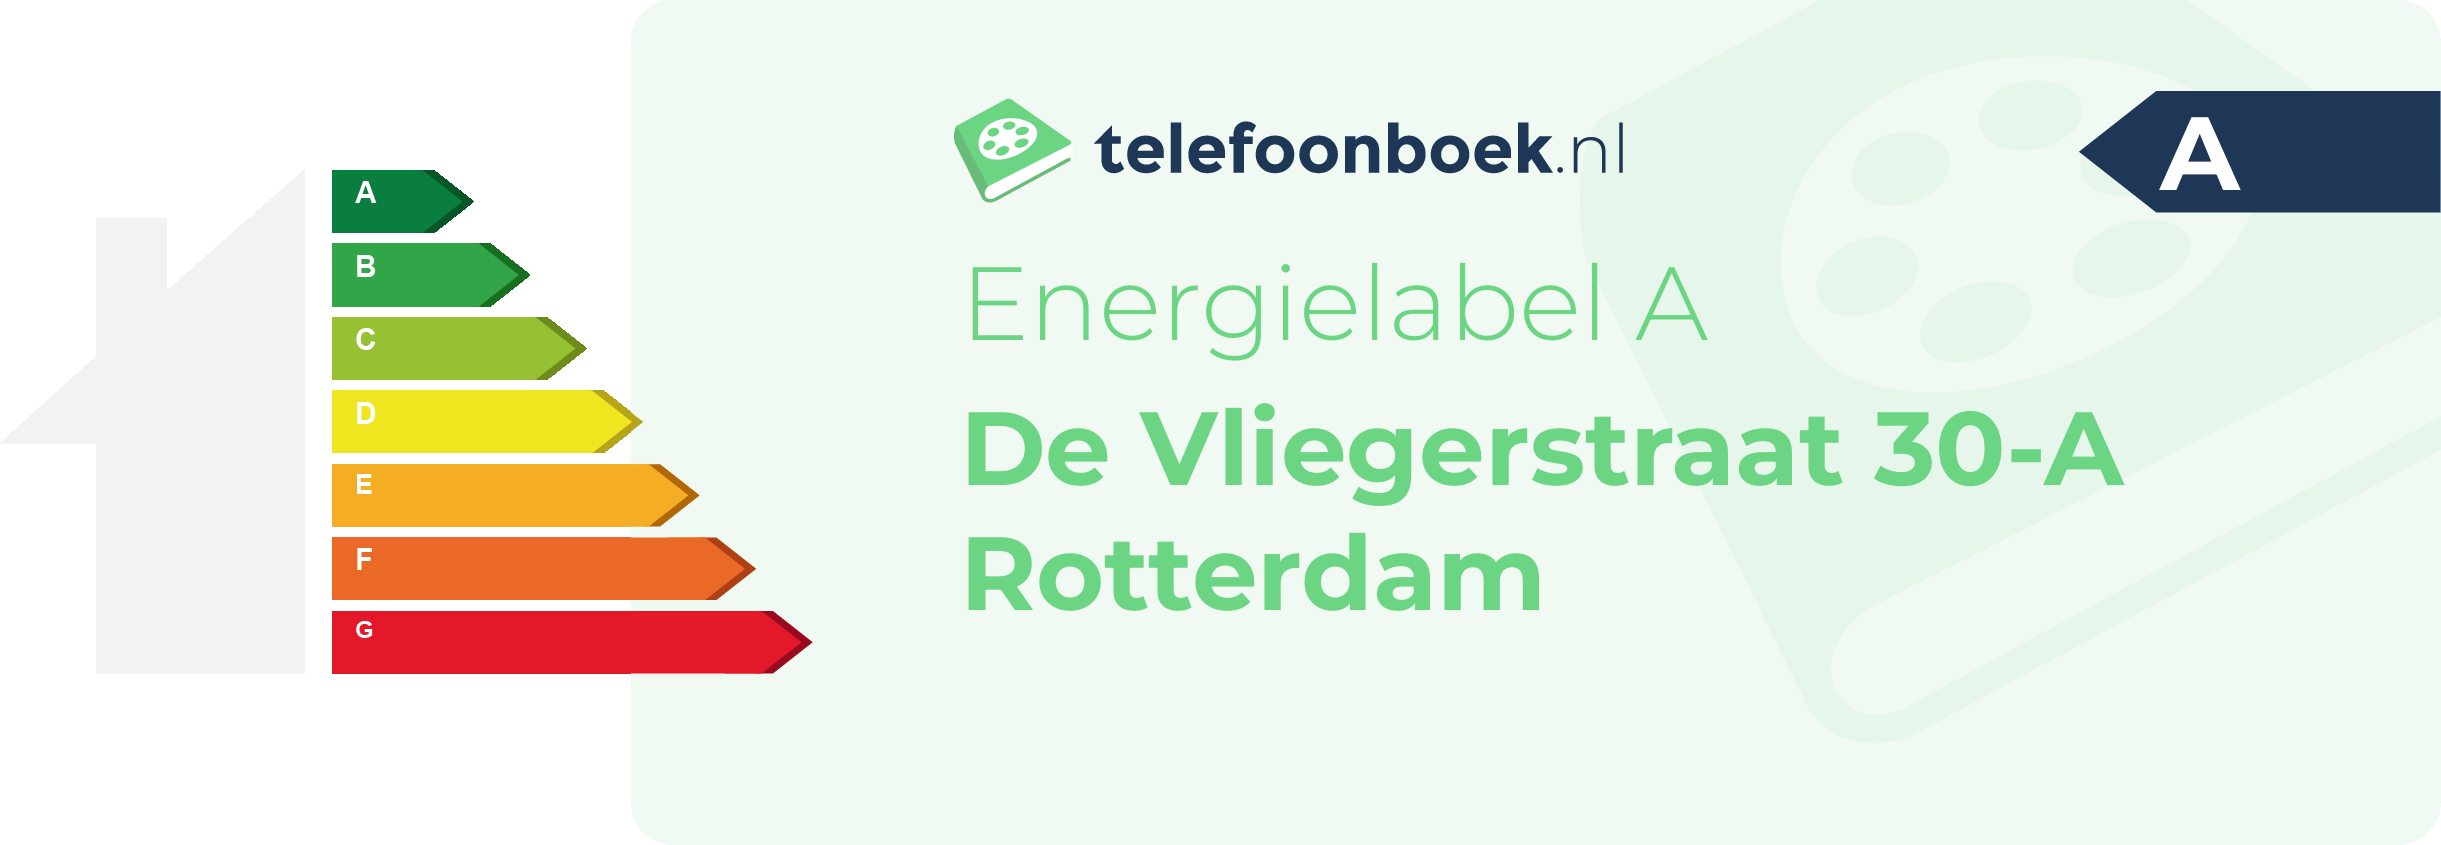 Energielabel De Vliegerstraat 30-A Rotterdam